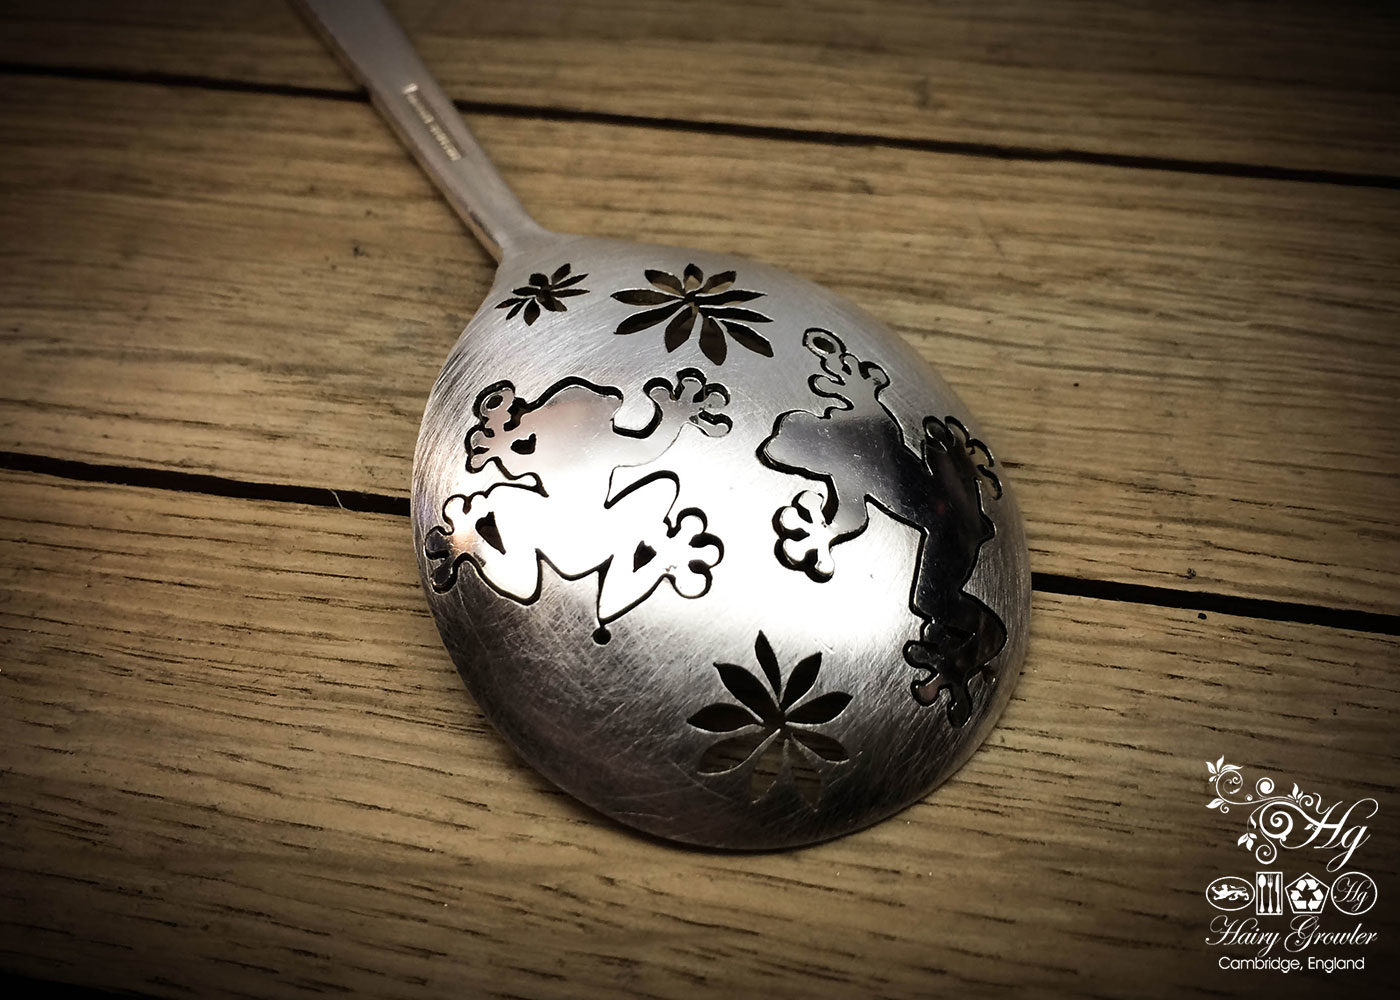 handmade and repurposed vintage spoon leap frog earrings made in cambridge, england